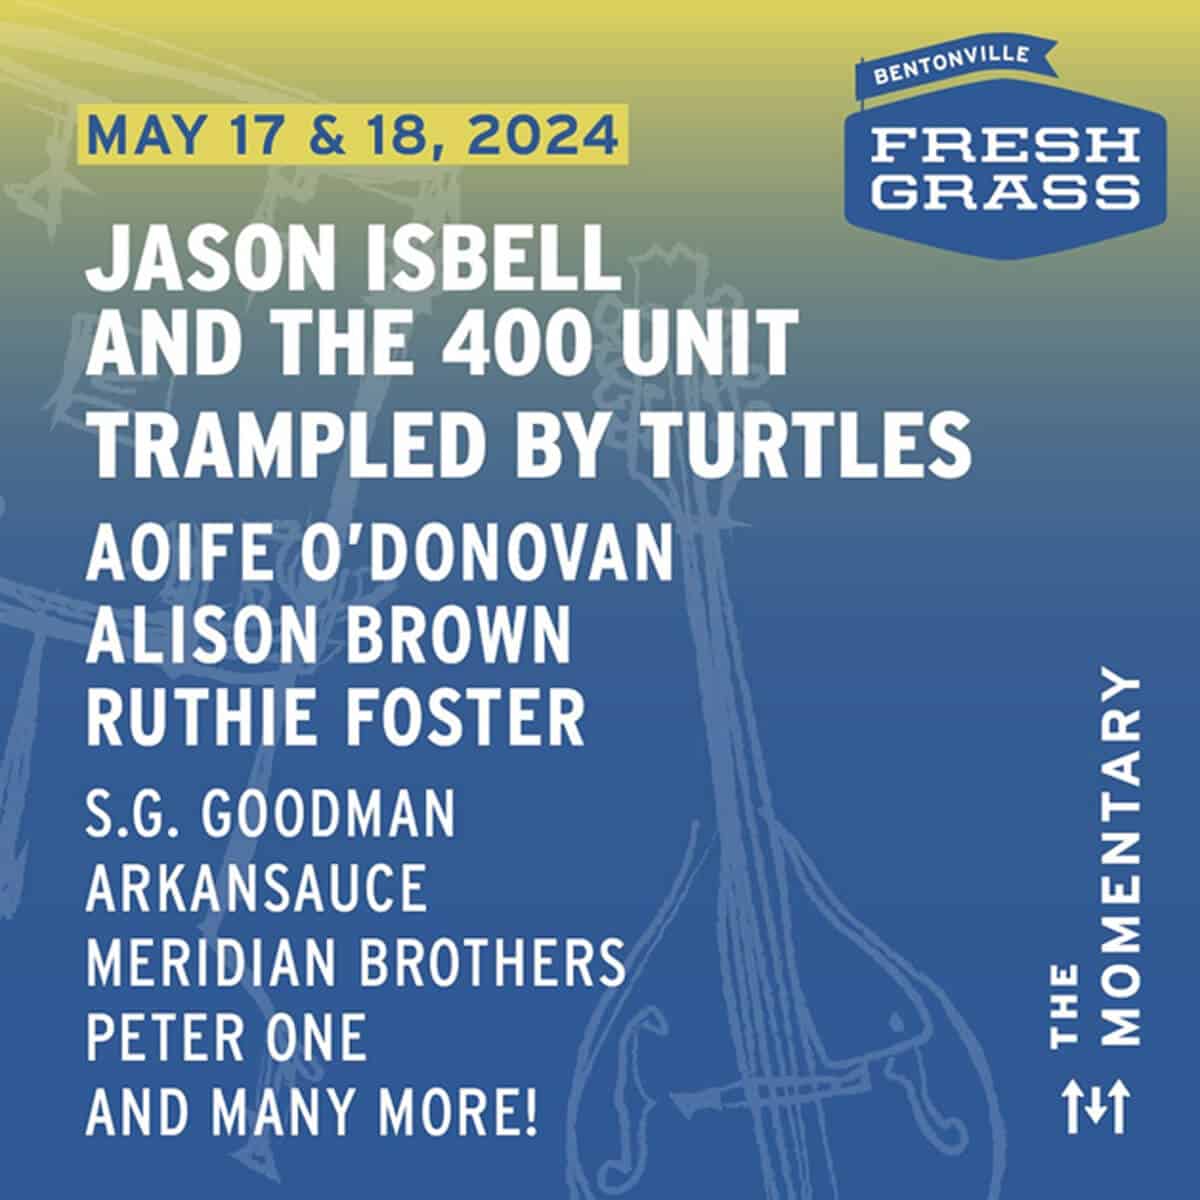 FreshGrass Festival Bentonville 2024 square